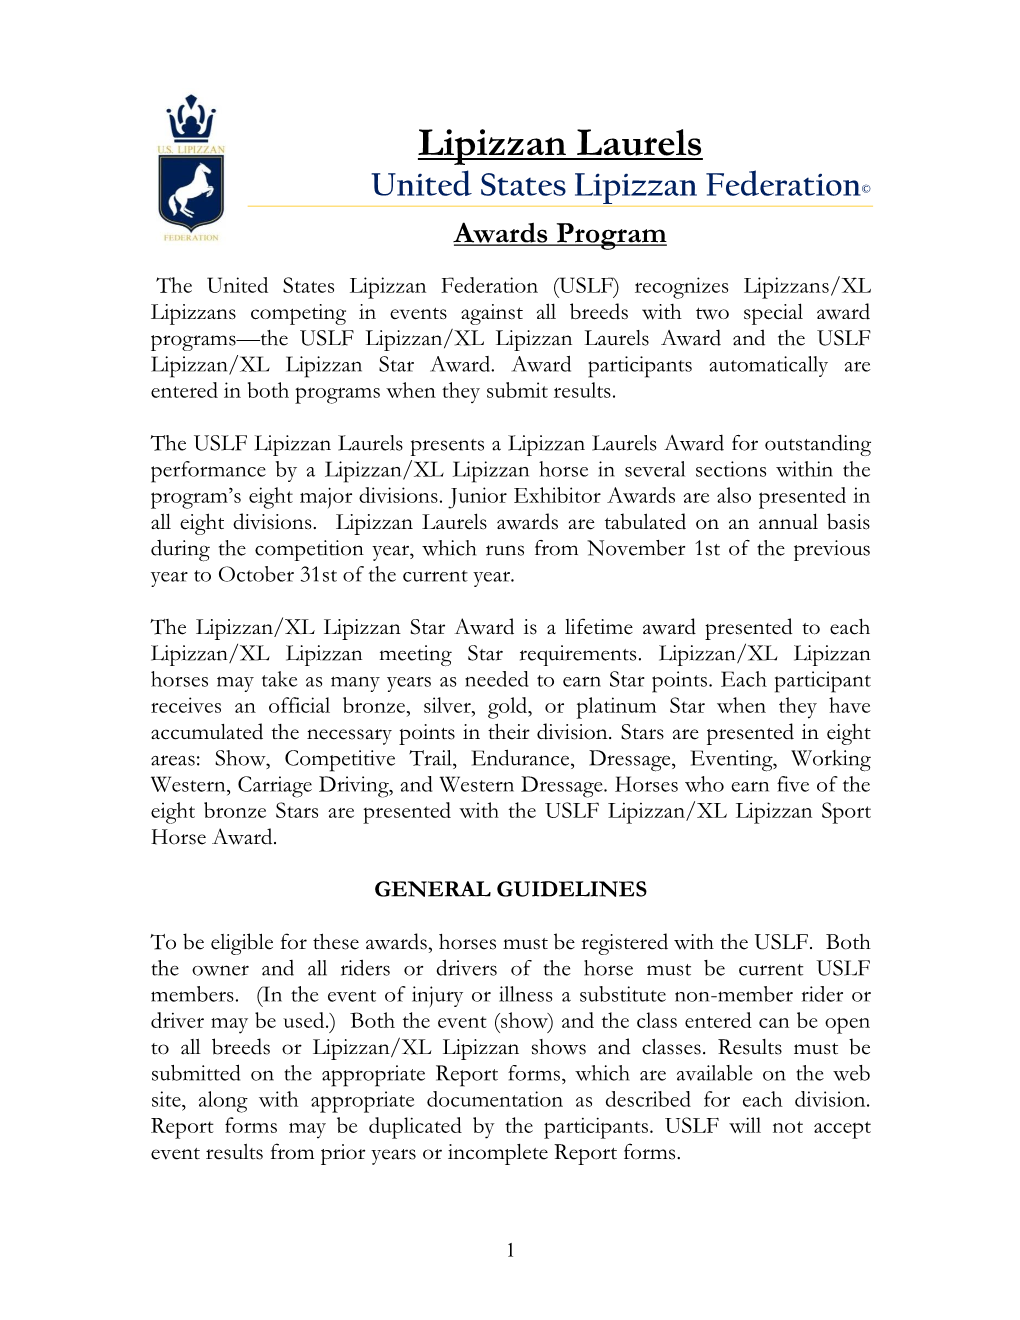 United States Lipizzan Federation (USLF) Awards Program